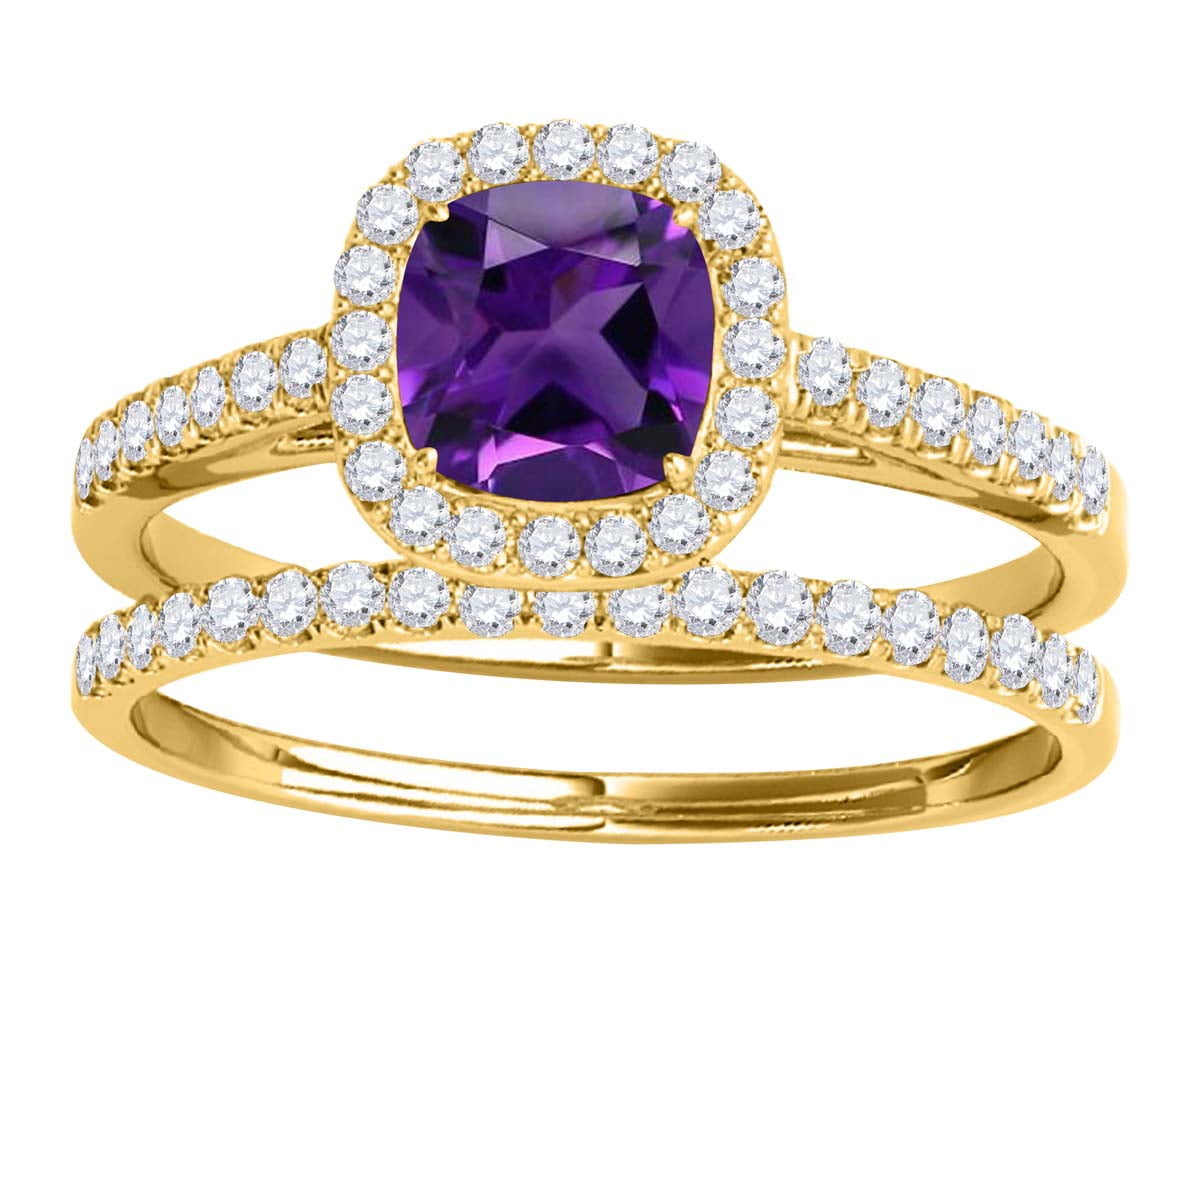 MauliJewels Rings for Women 1.82 Carat Cushion Cut Peridot and Diamond Ring prong 10K Yellow Gold Gemstone Wedding Jewelry Collection 